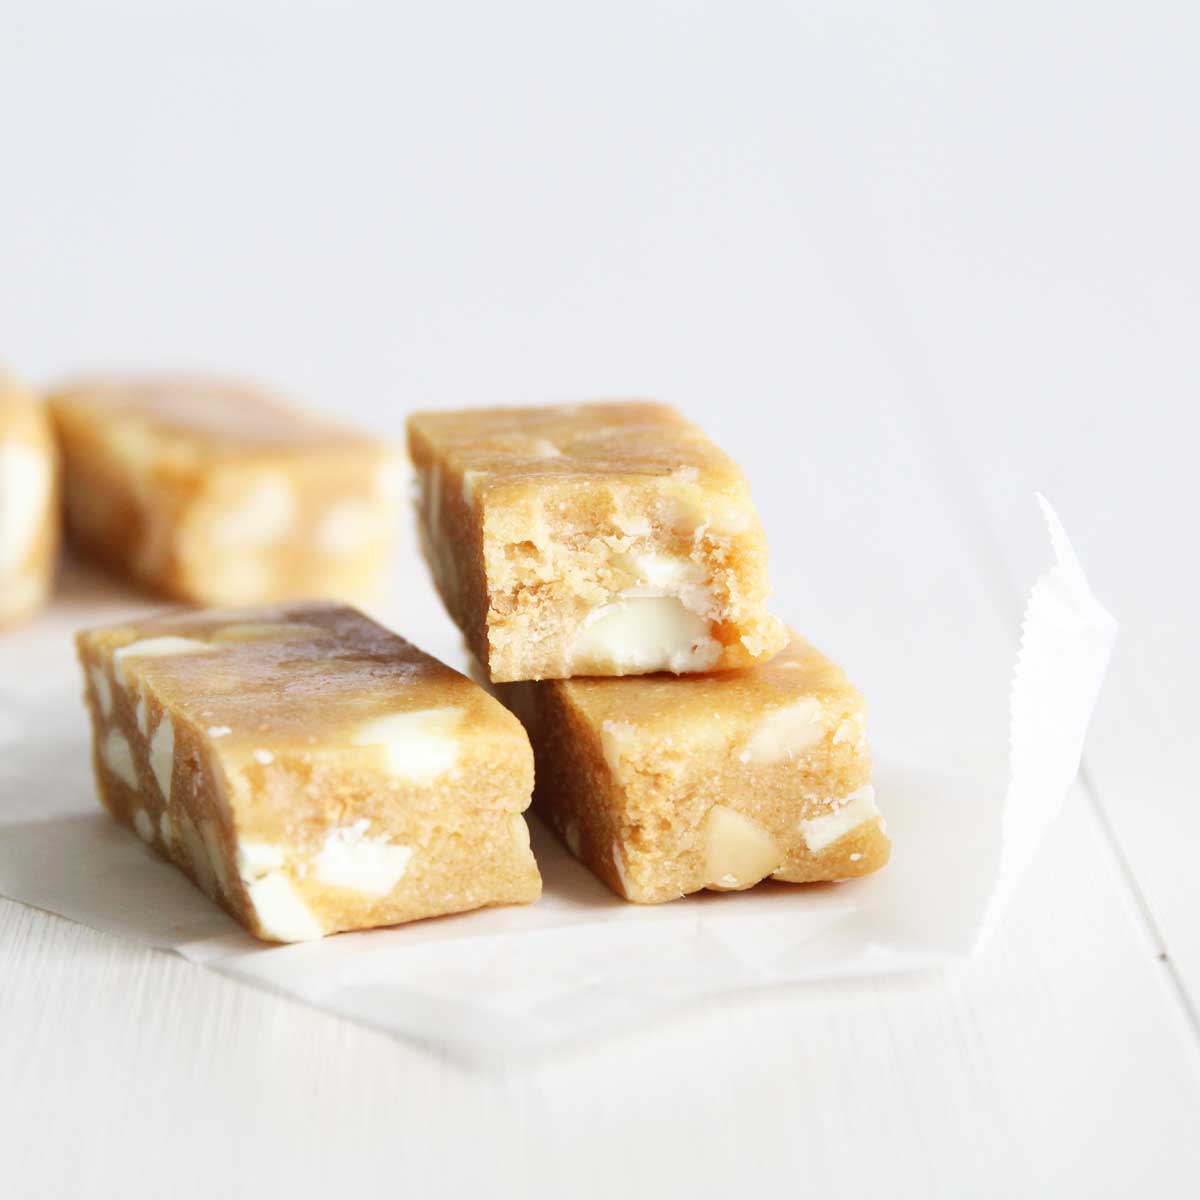 Chunky White Chocolate Macadamia Protein Bars Recipe (made with Collagen Peptides) - Zero-Sugar Whipped Cream